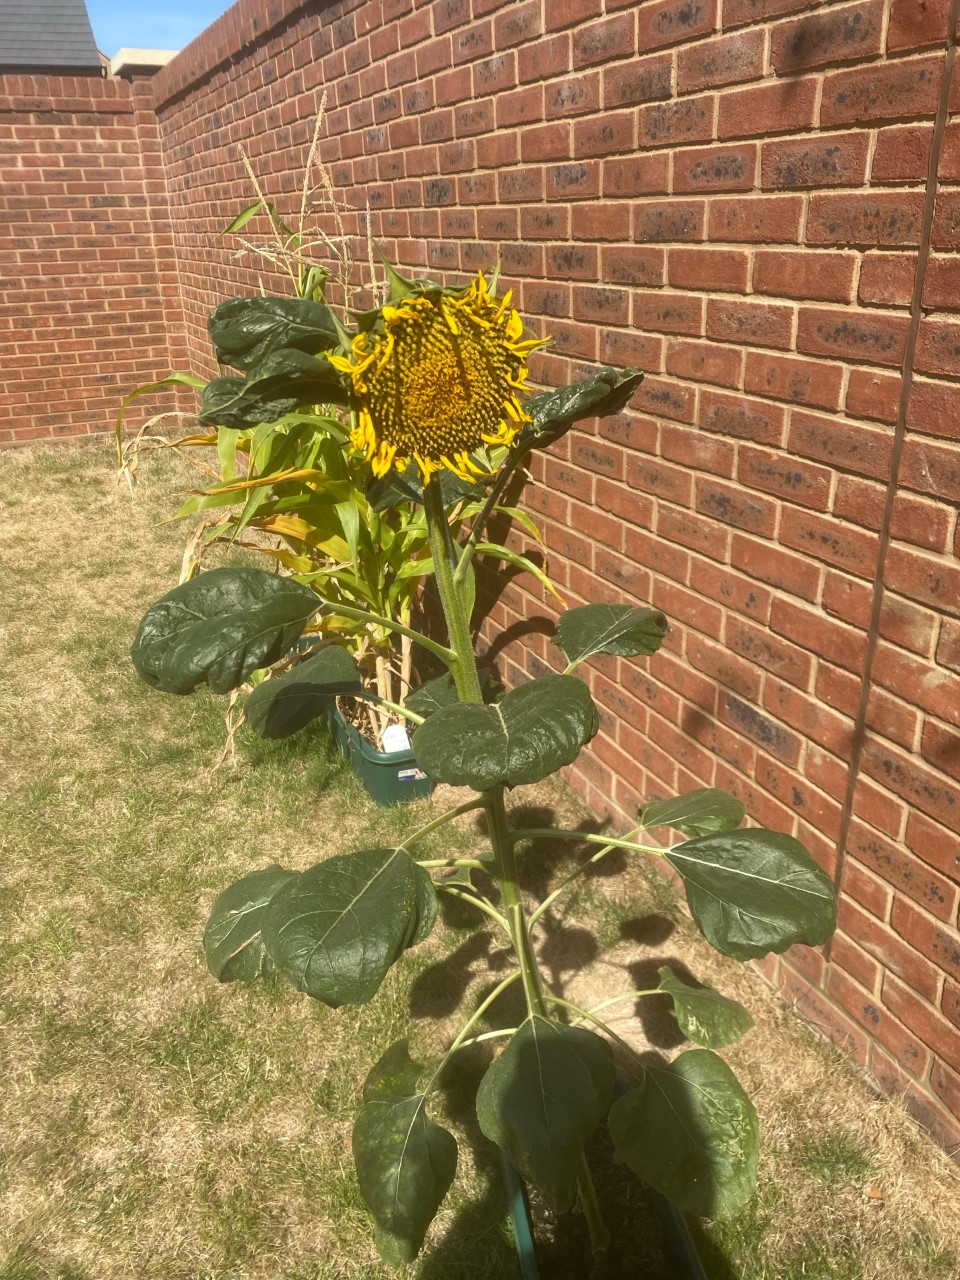 Luk G - Please see my photo of my sunflower below!